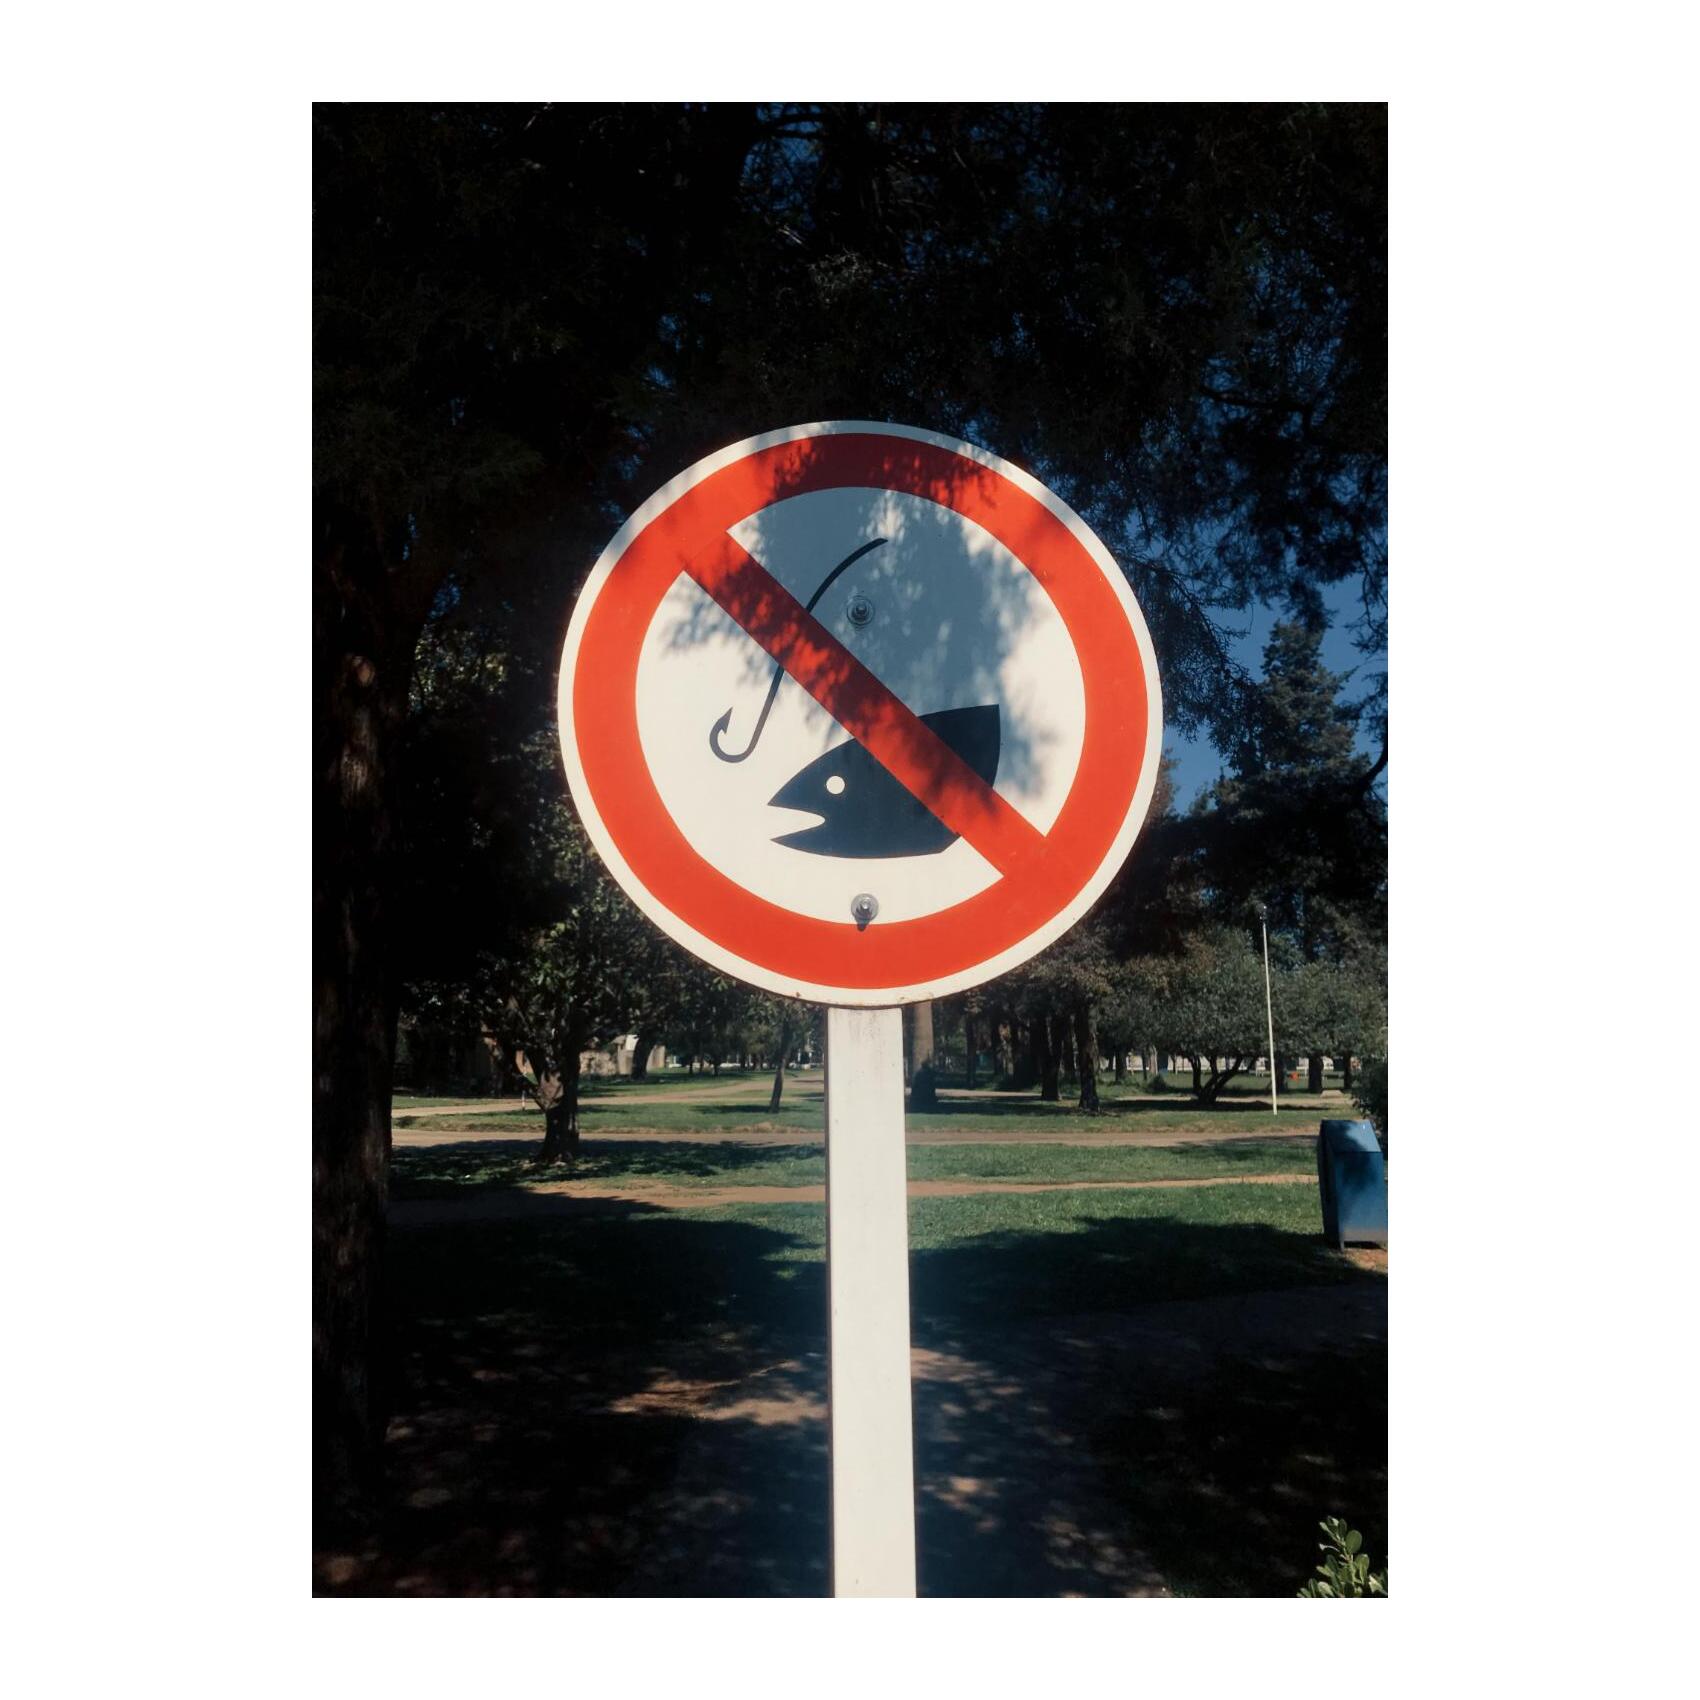 a "no fishing" sign